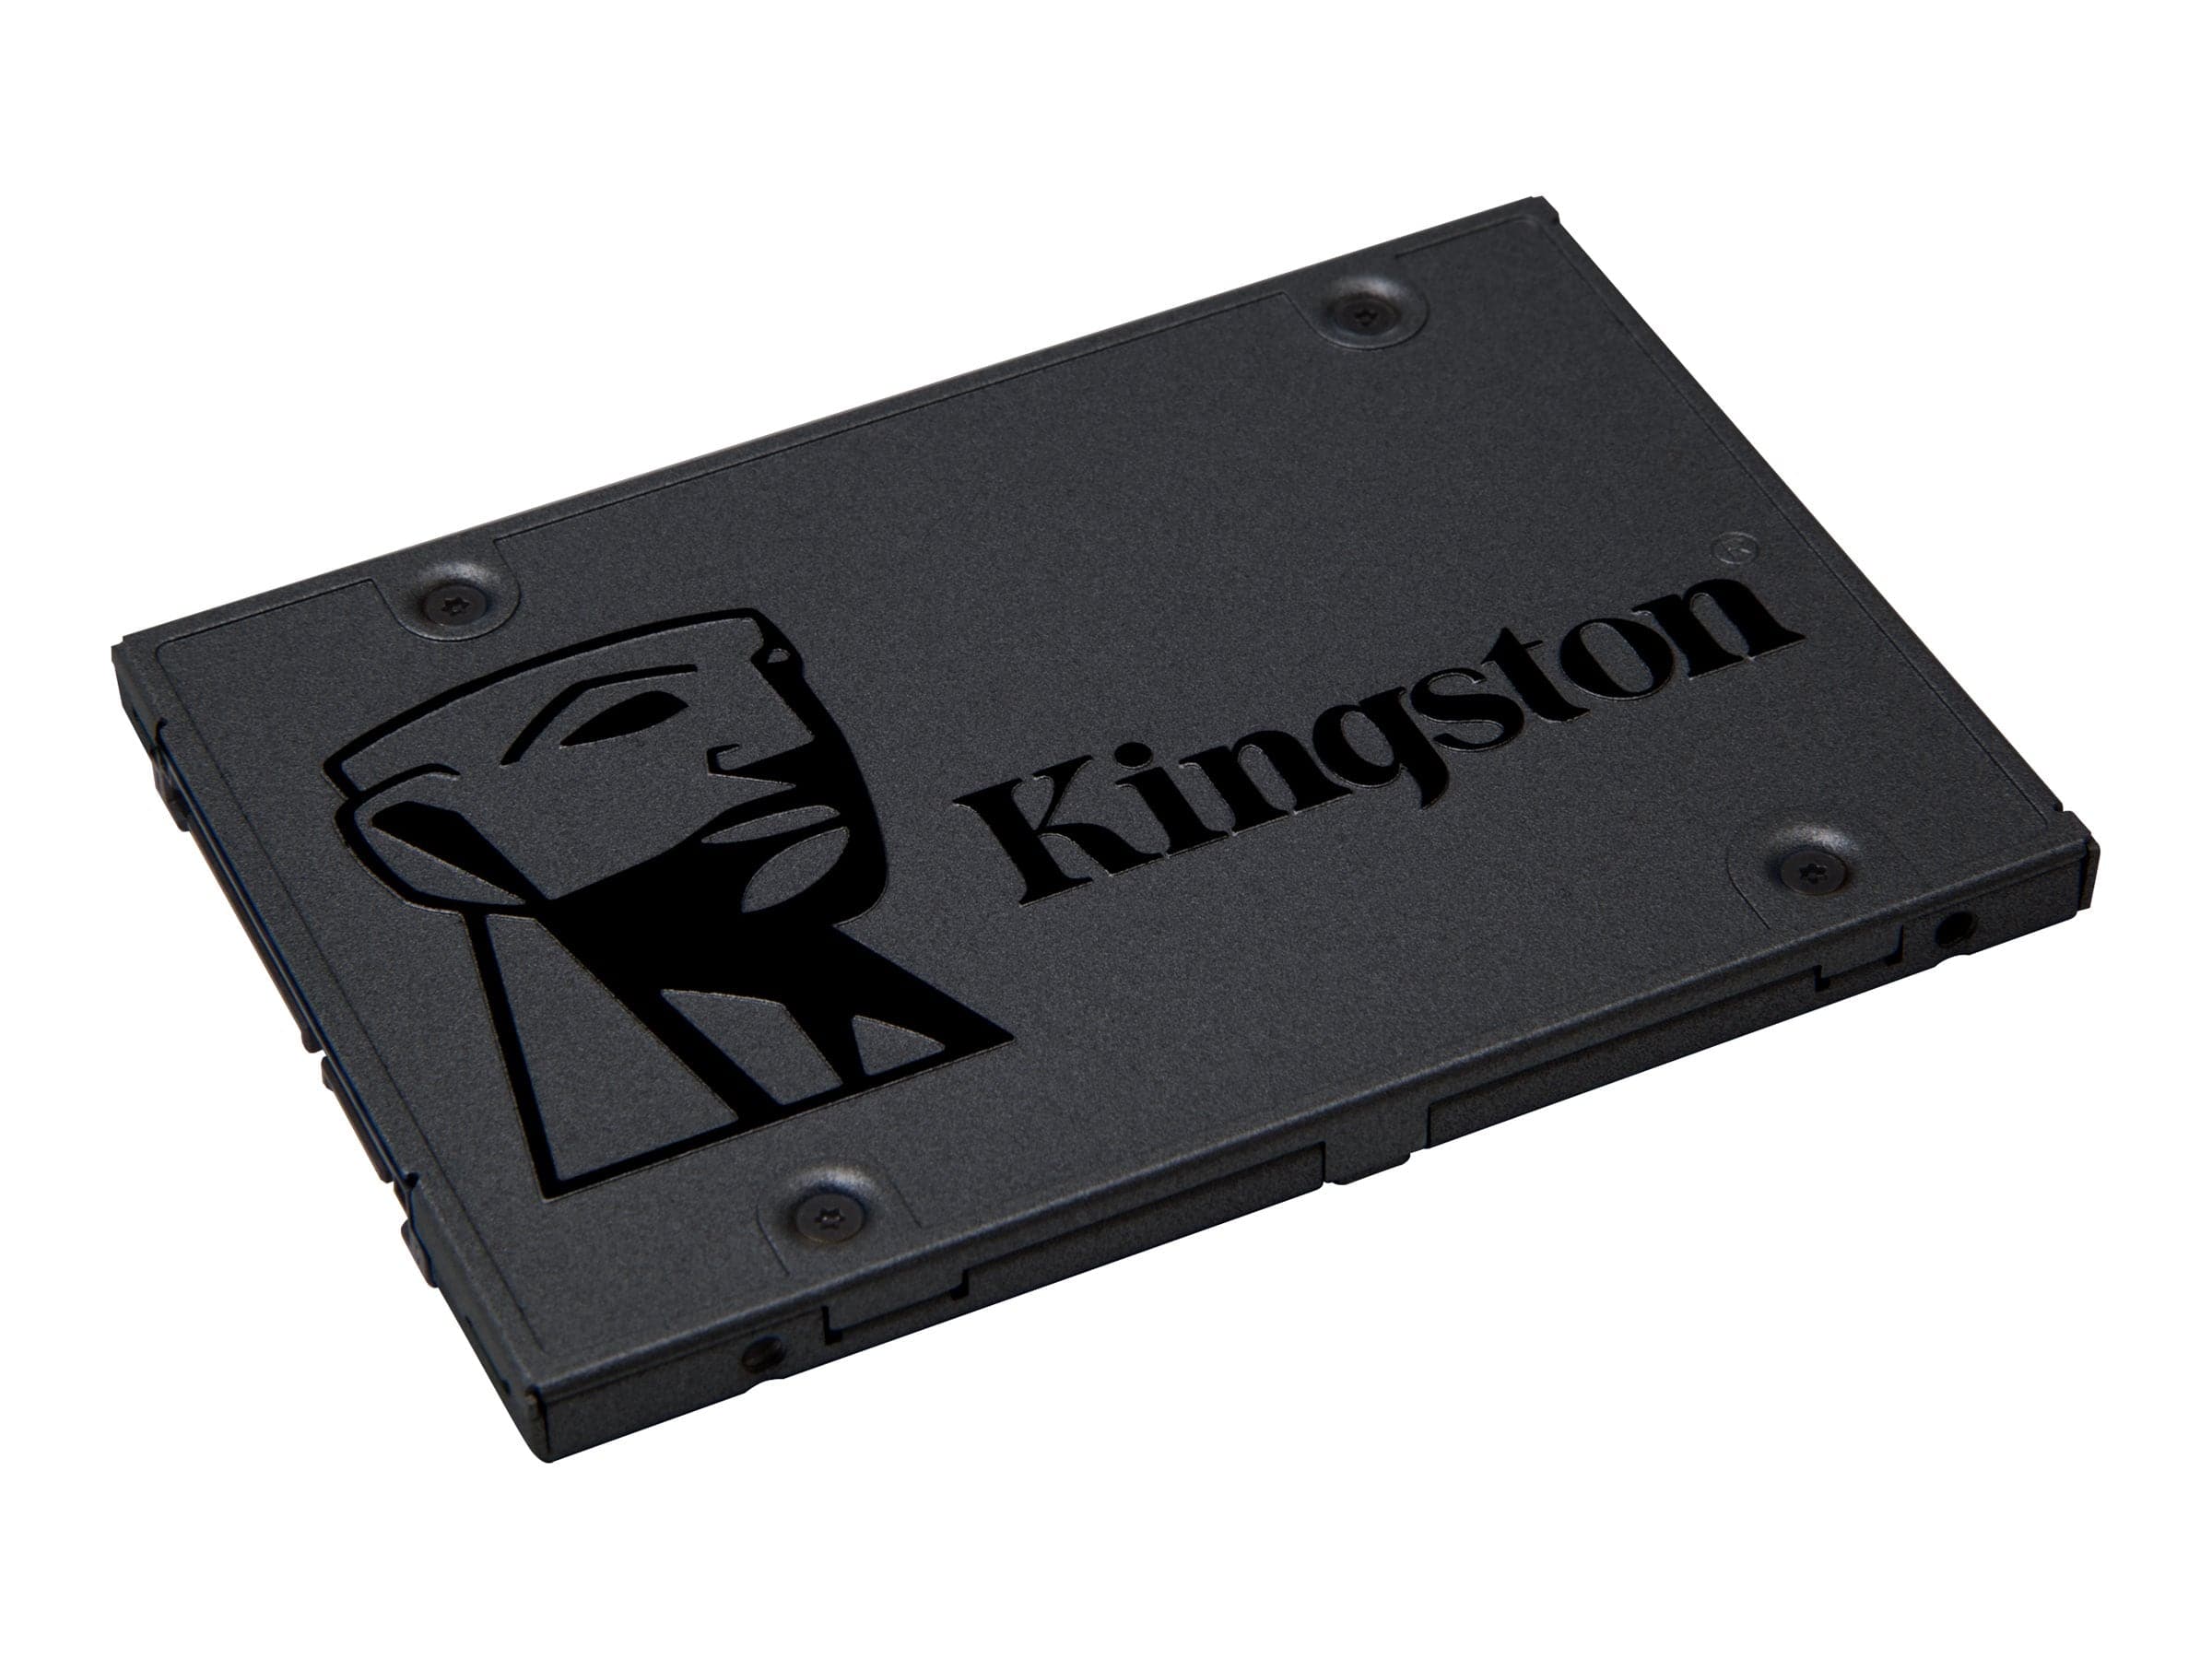 Kingston SSD A400 960GB 2,5" SATA-600